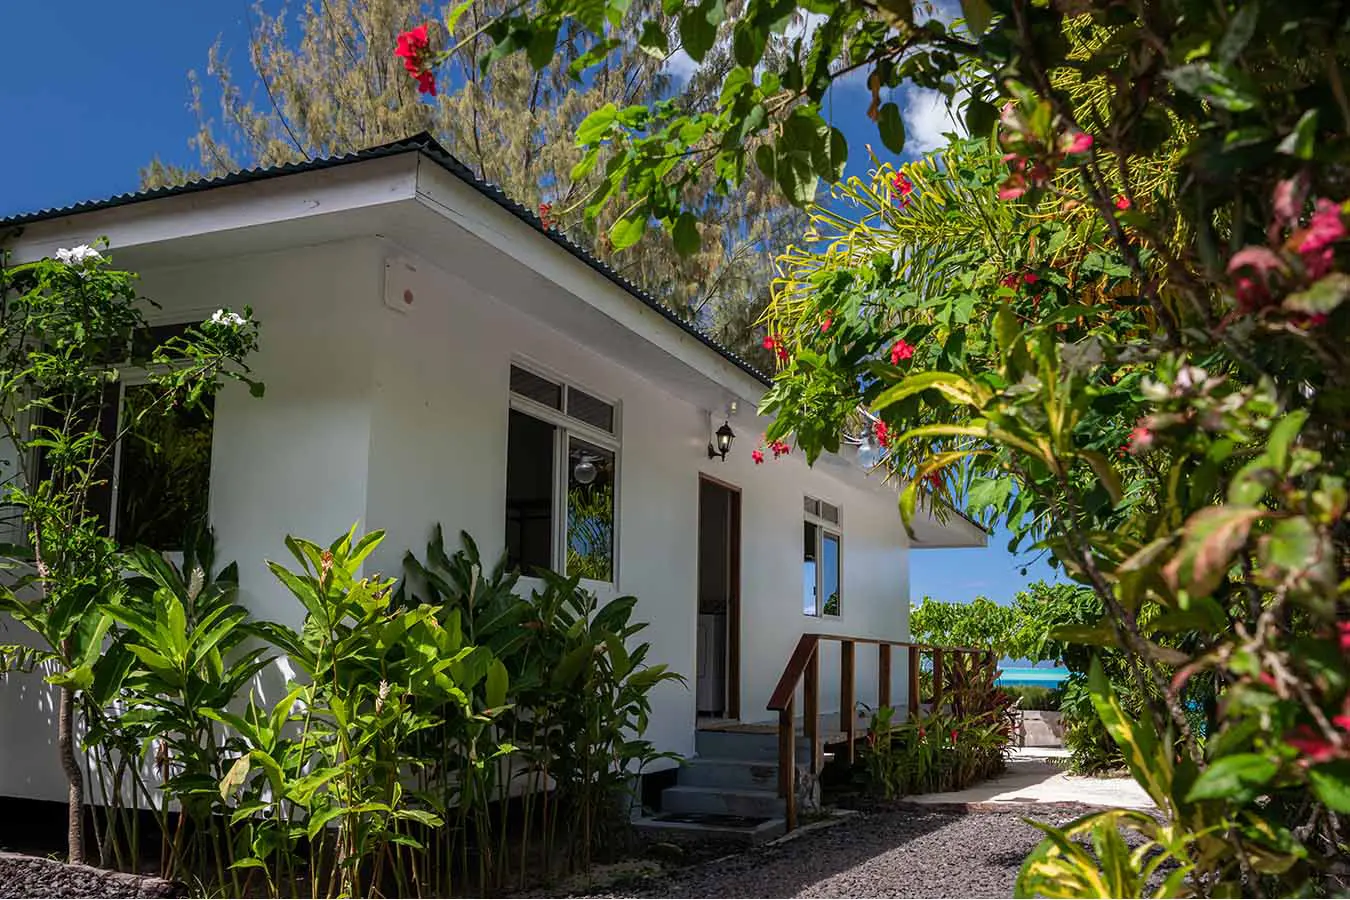 Entrance of the Bora Bora vacation home